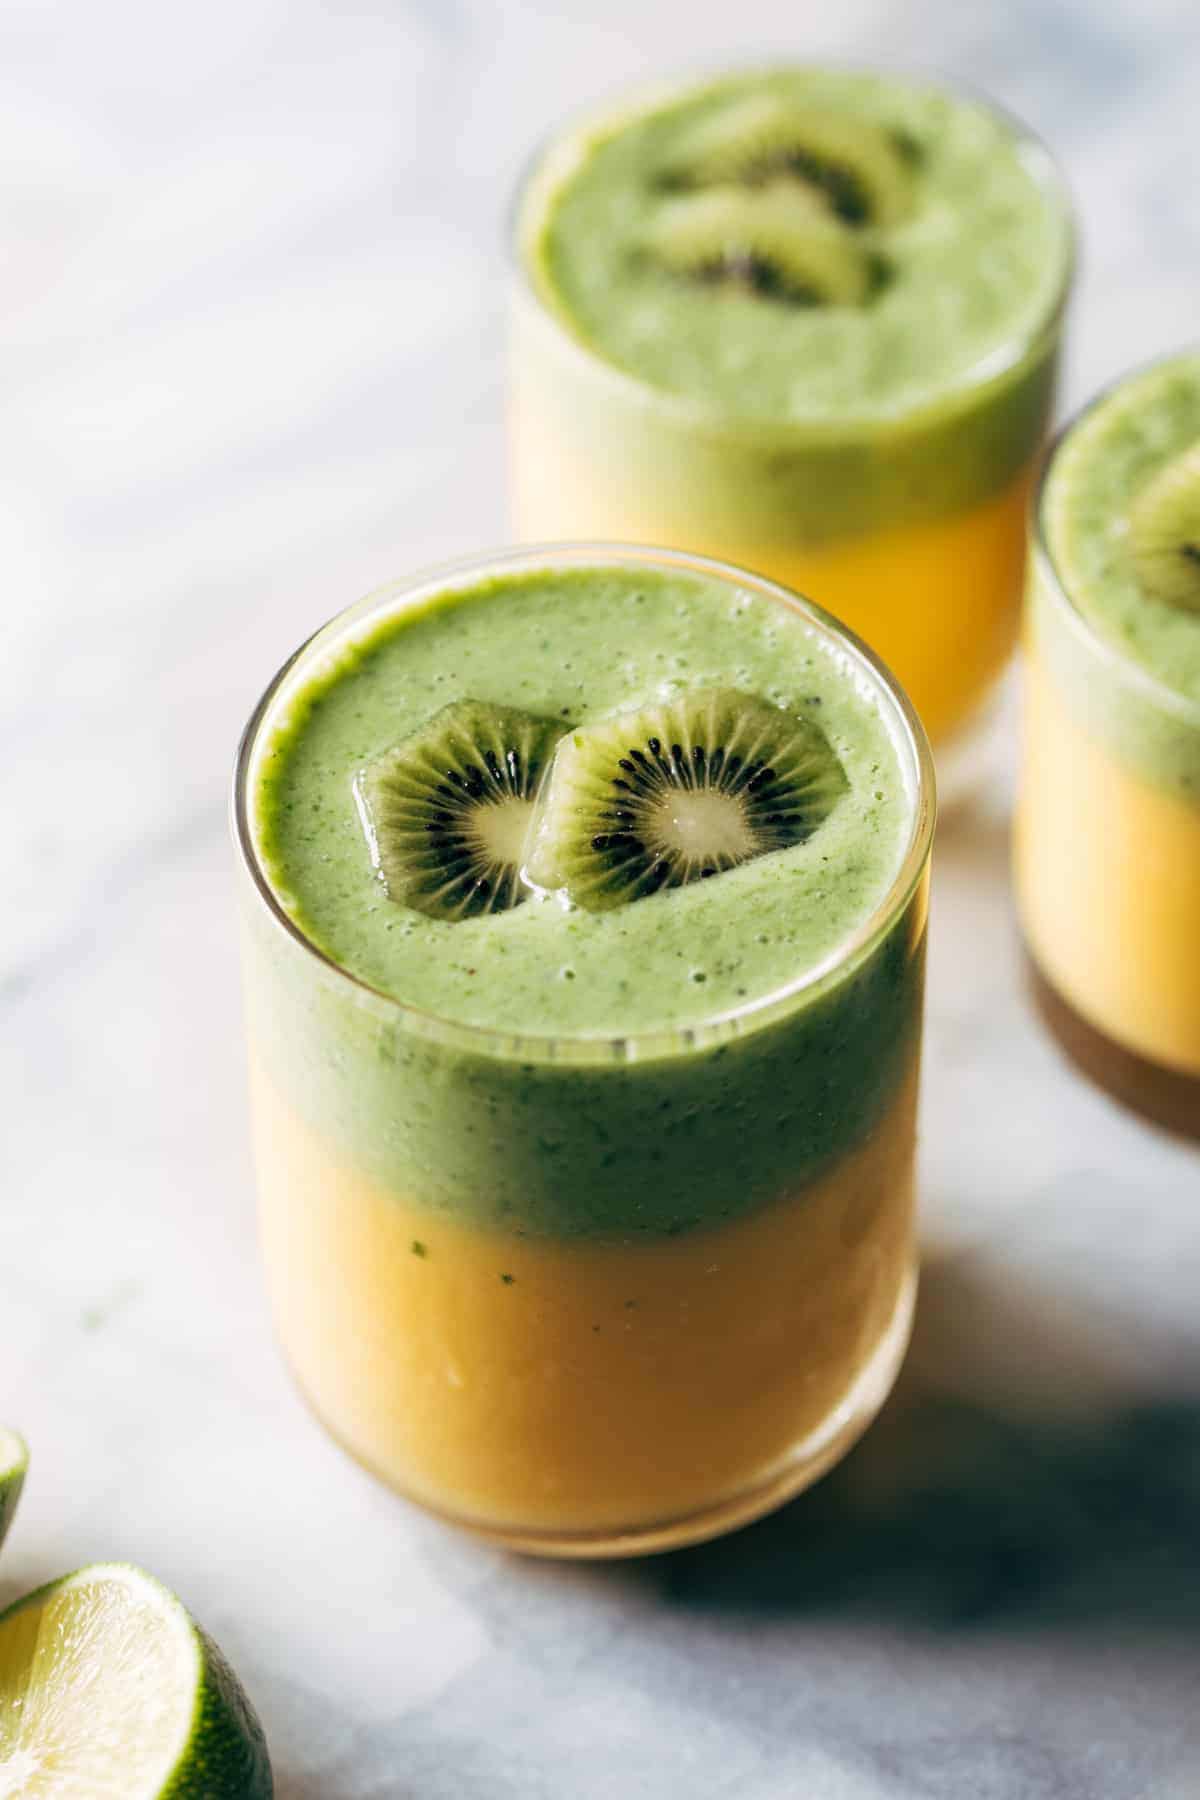 Mango Kiwi Coolers 3 - 10 Healthy Summer Smoothie Recipes